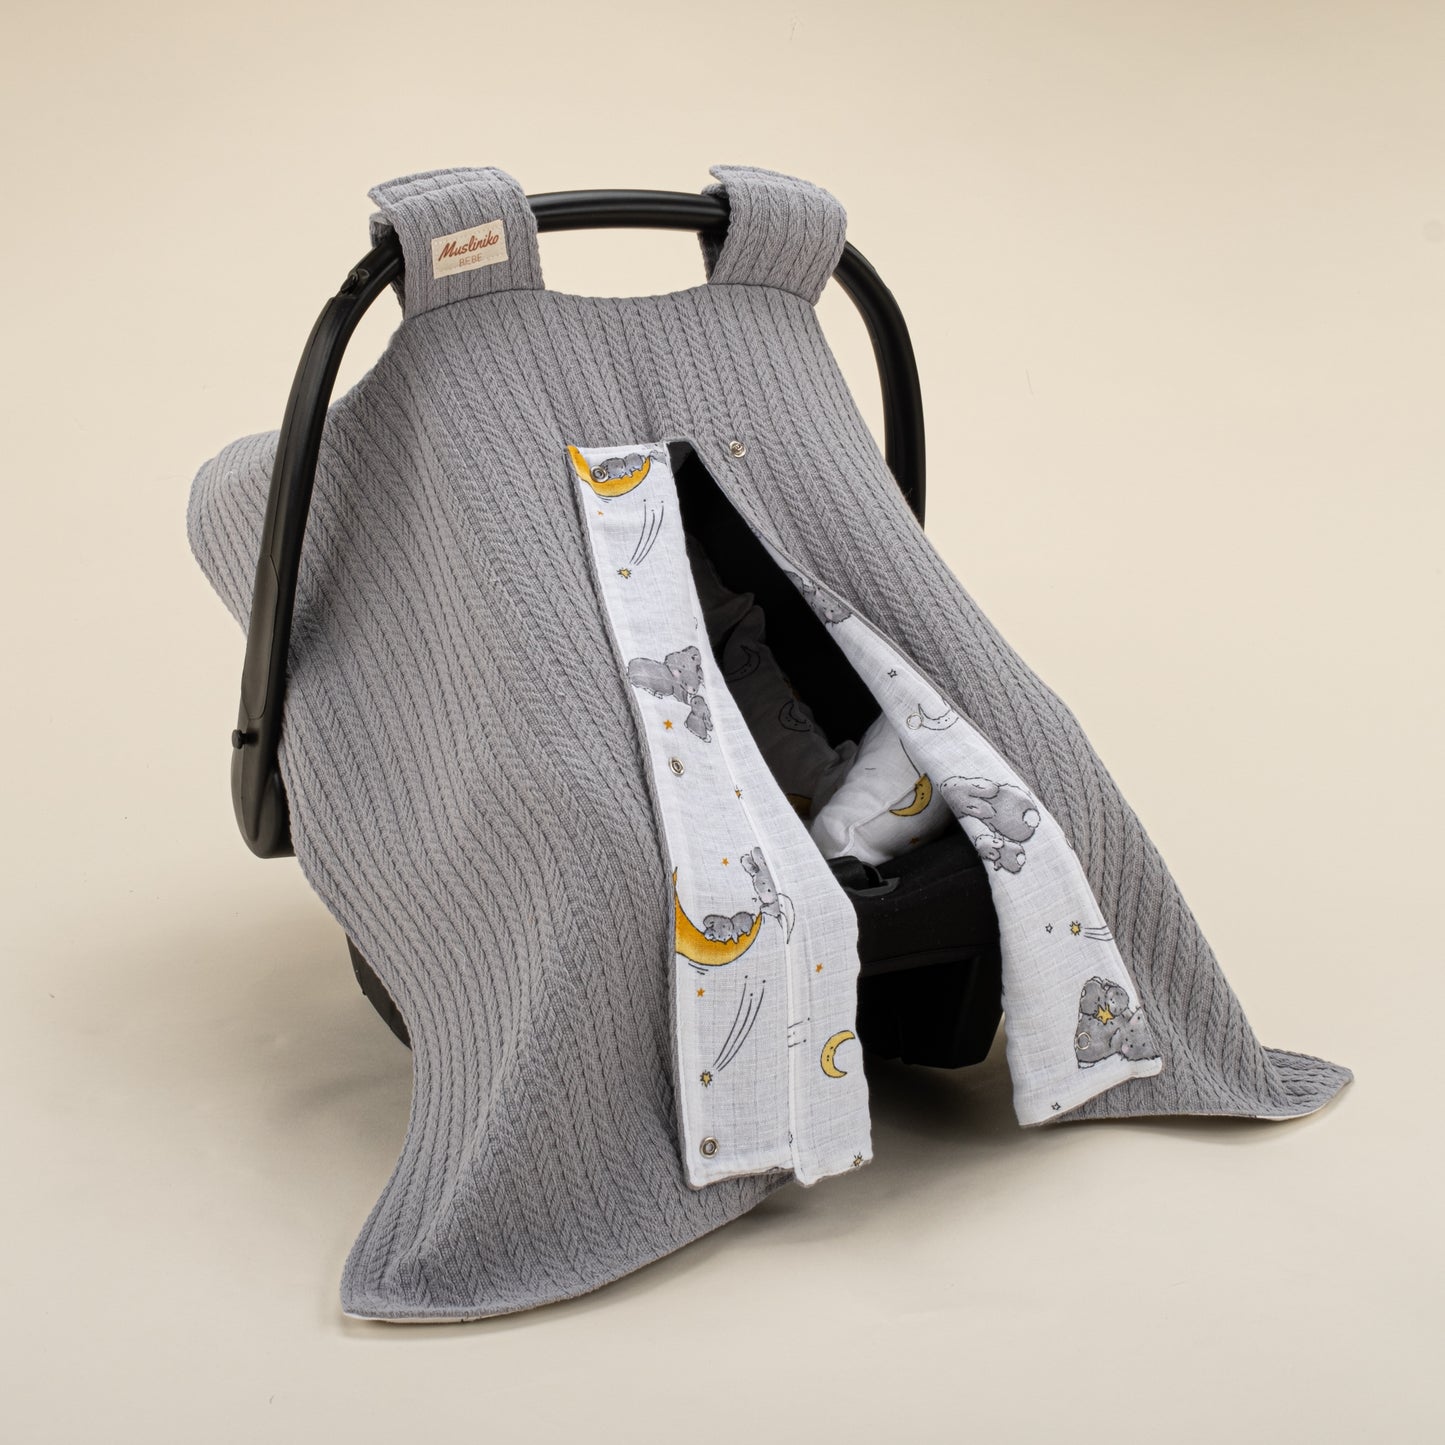 Stroller Cover Set - Double Side - Dark Gray Knit - Gray Rabbit